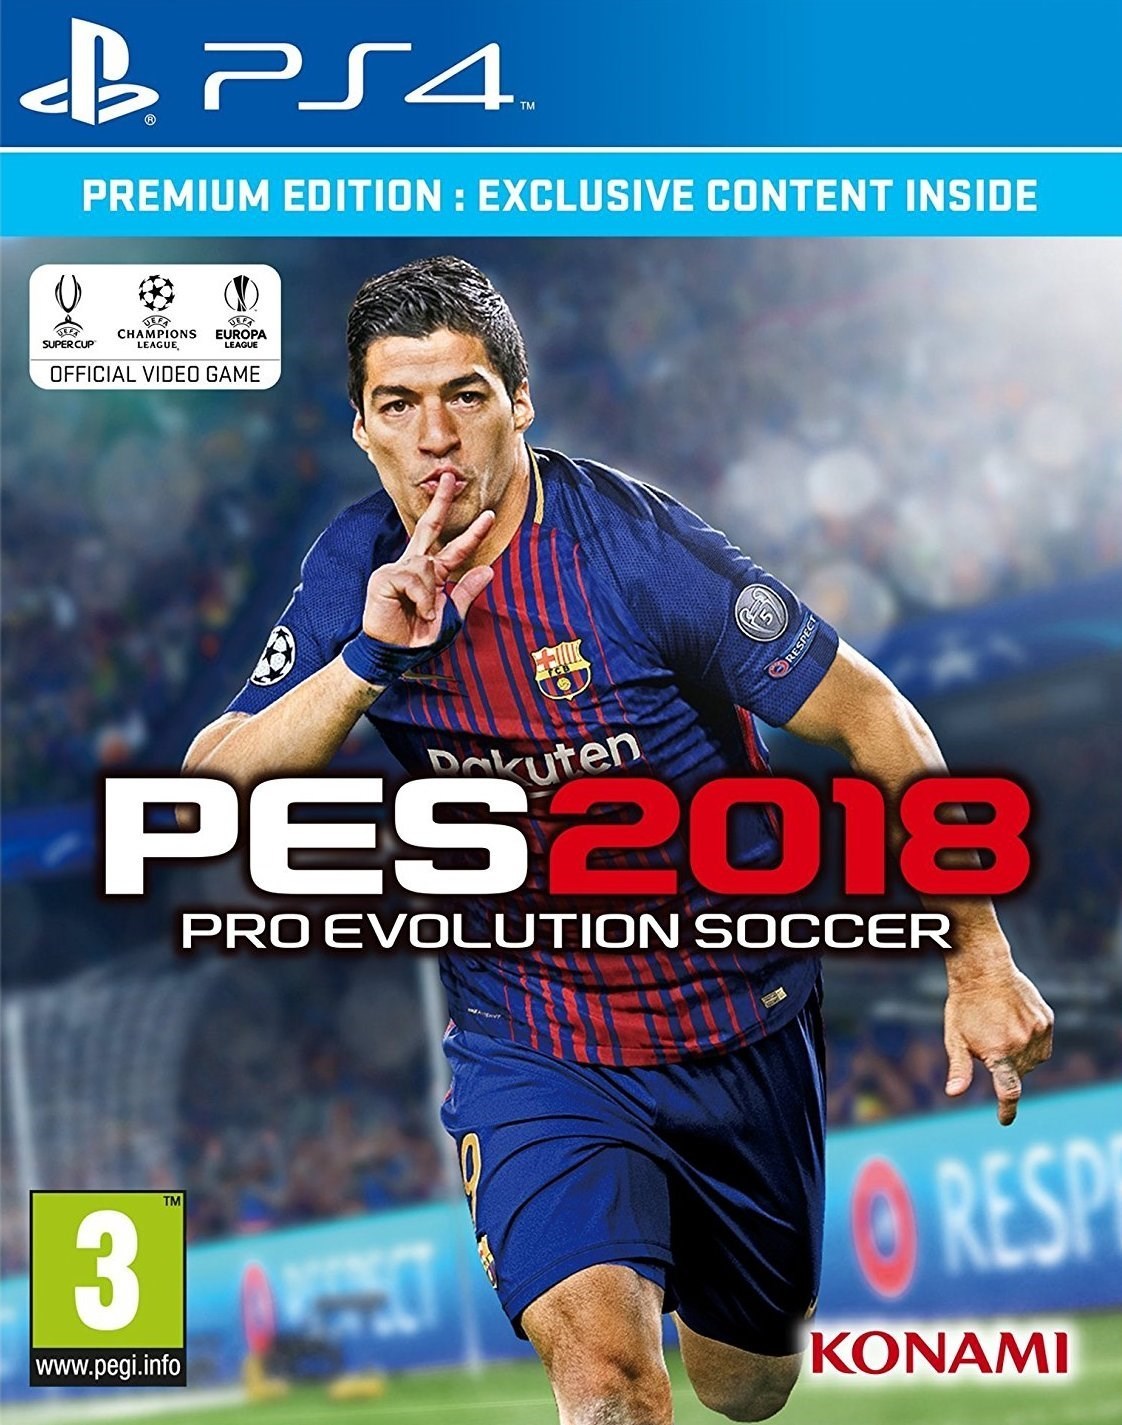 Pro Evolution Soccer 2018 (PES 2018) – Premium Edition